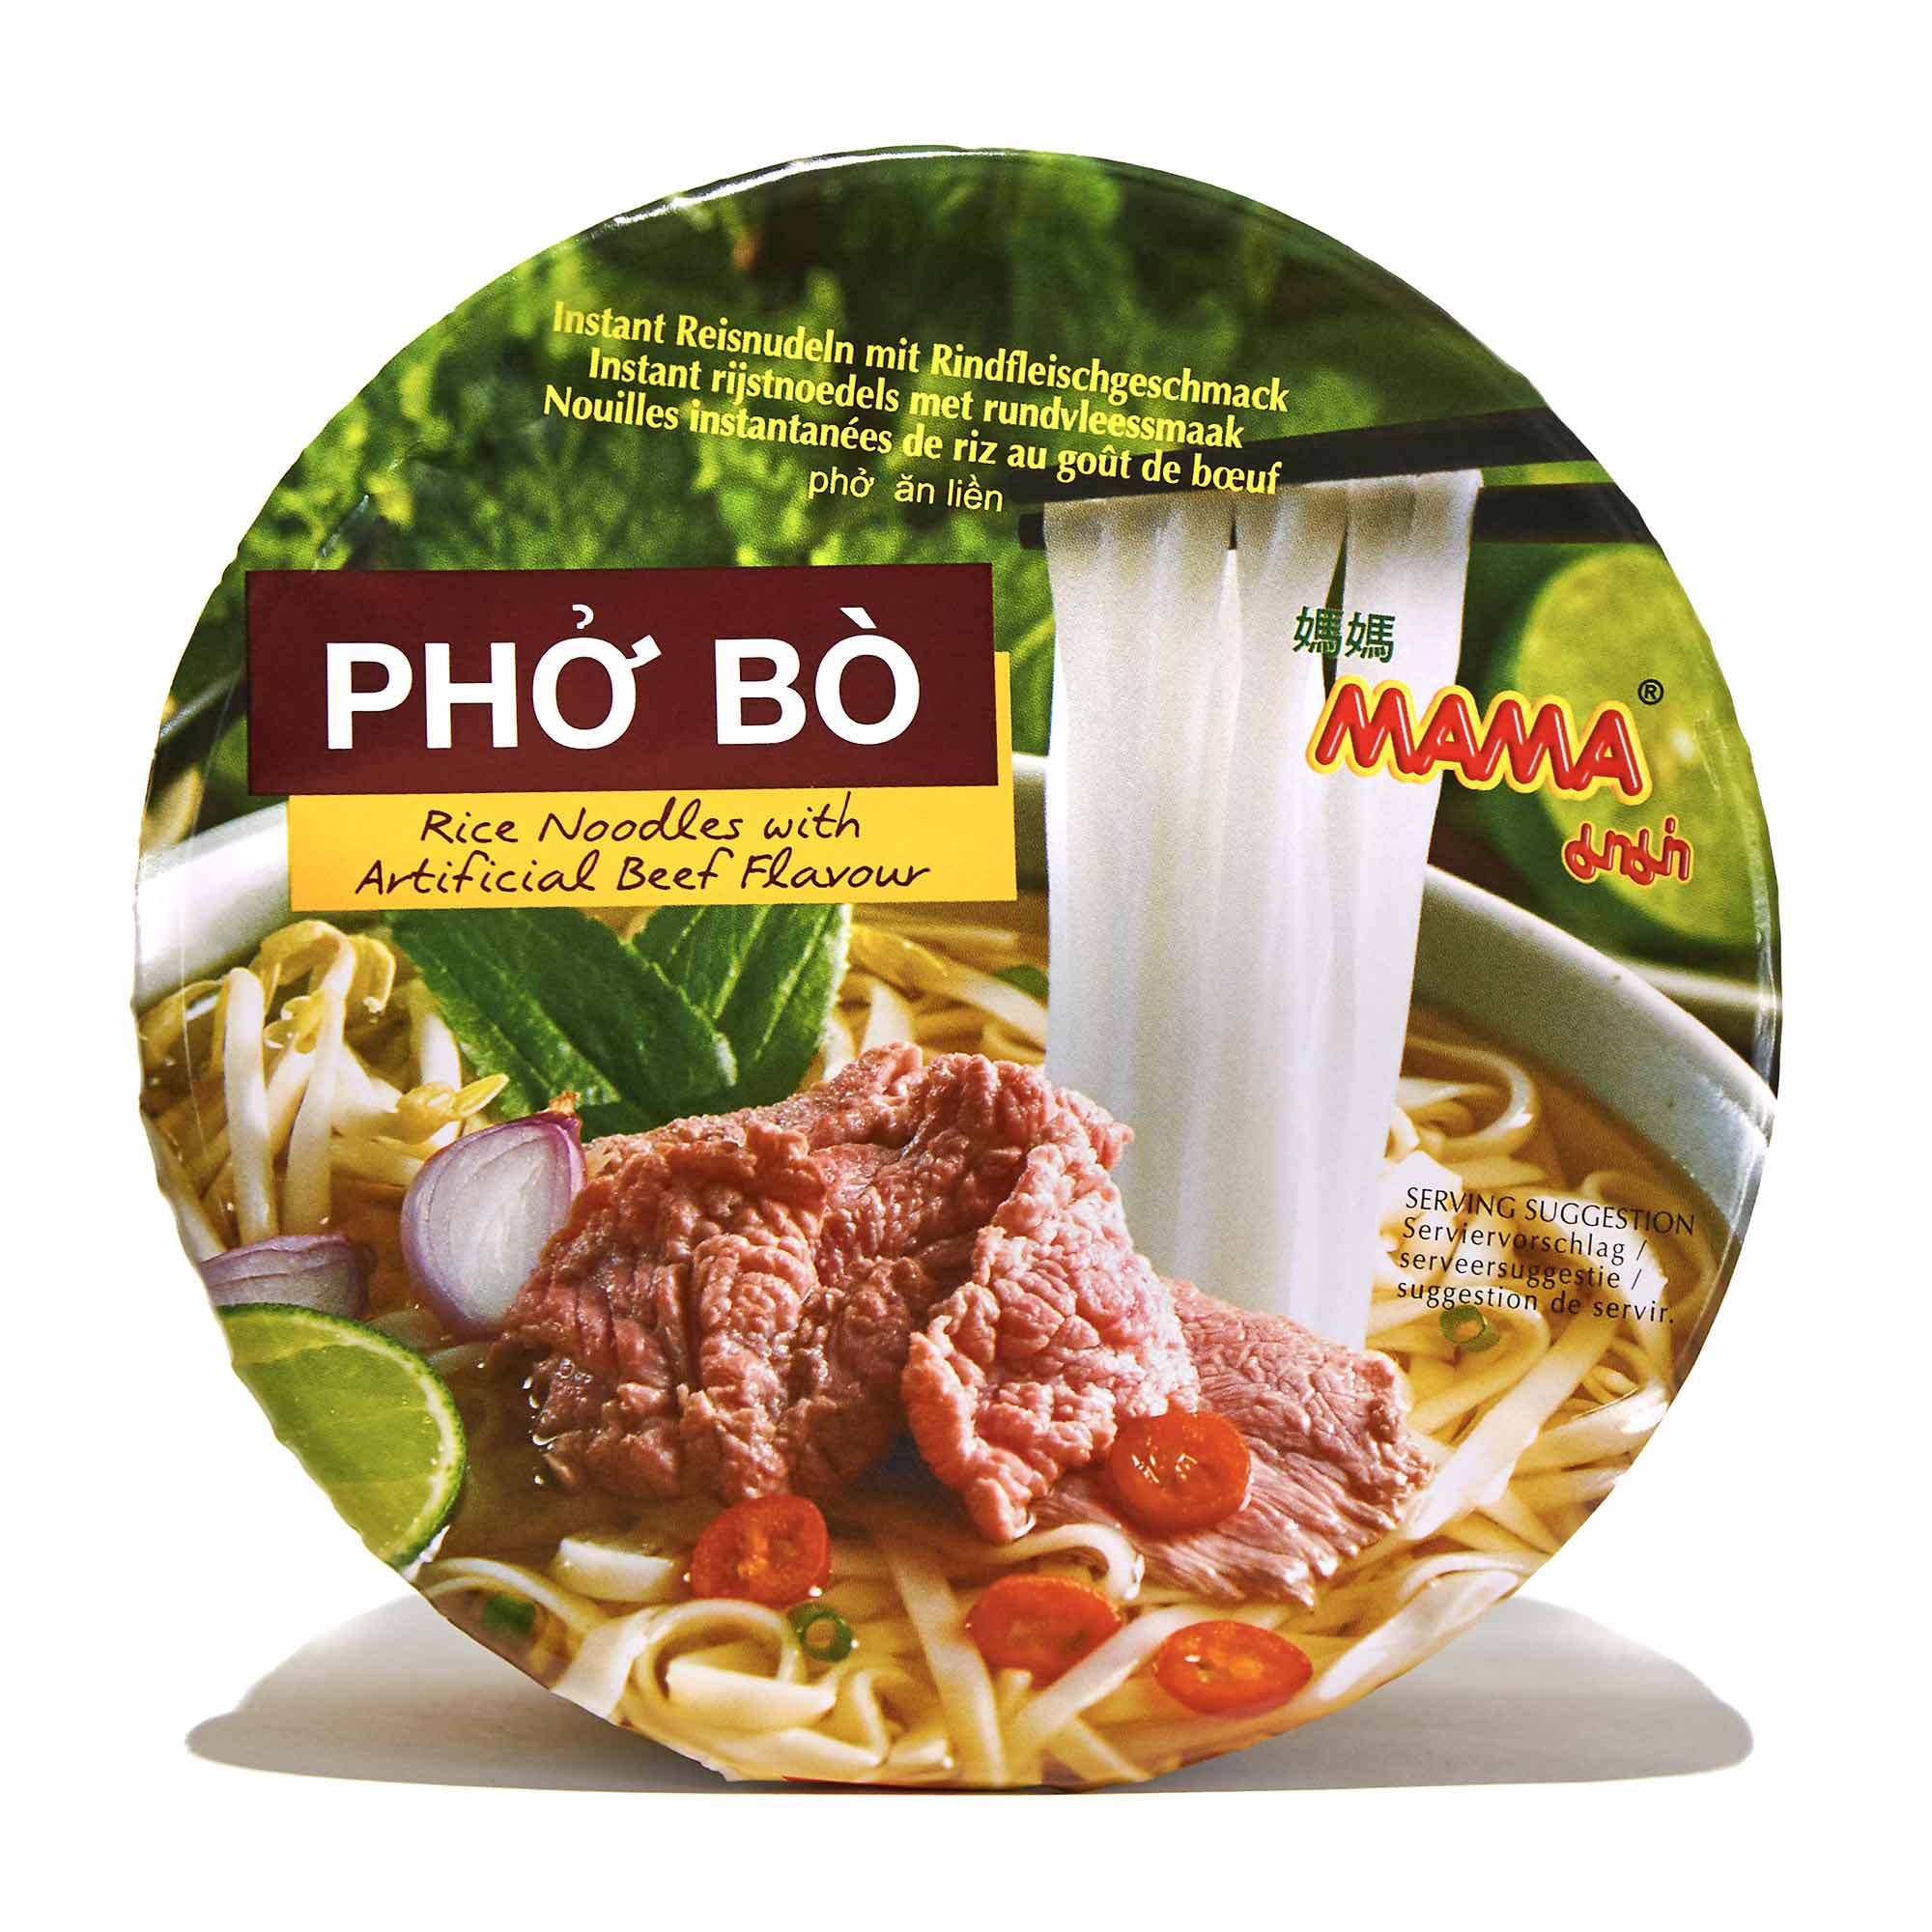 Mama Instant Noodles, Oriental Style, Pork Flavor - 2.47 oz